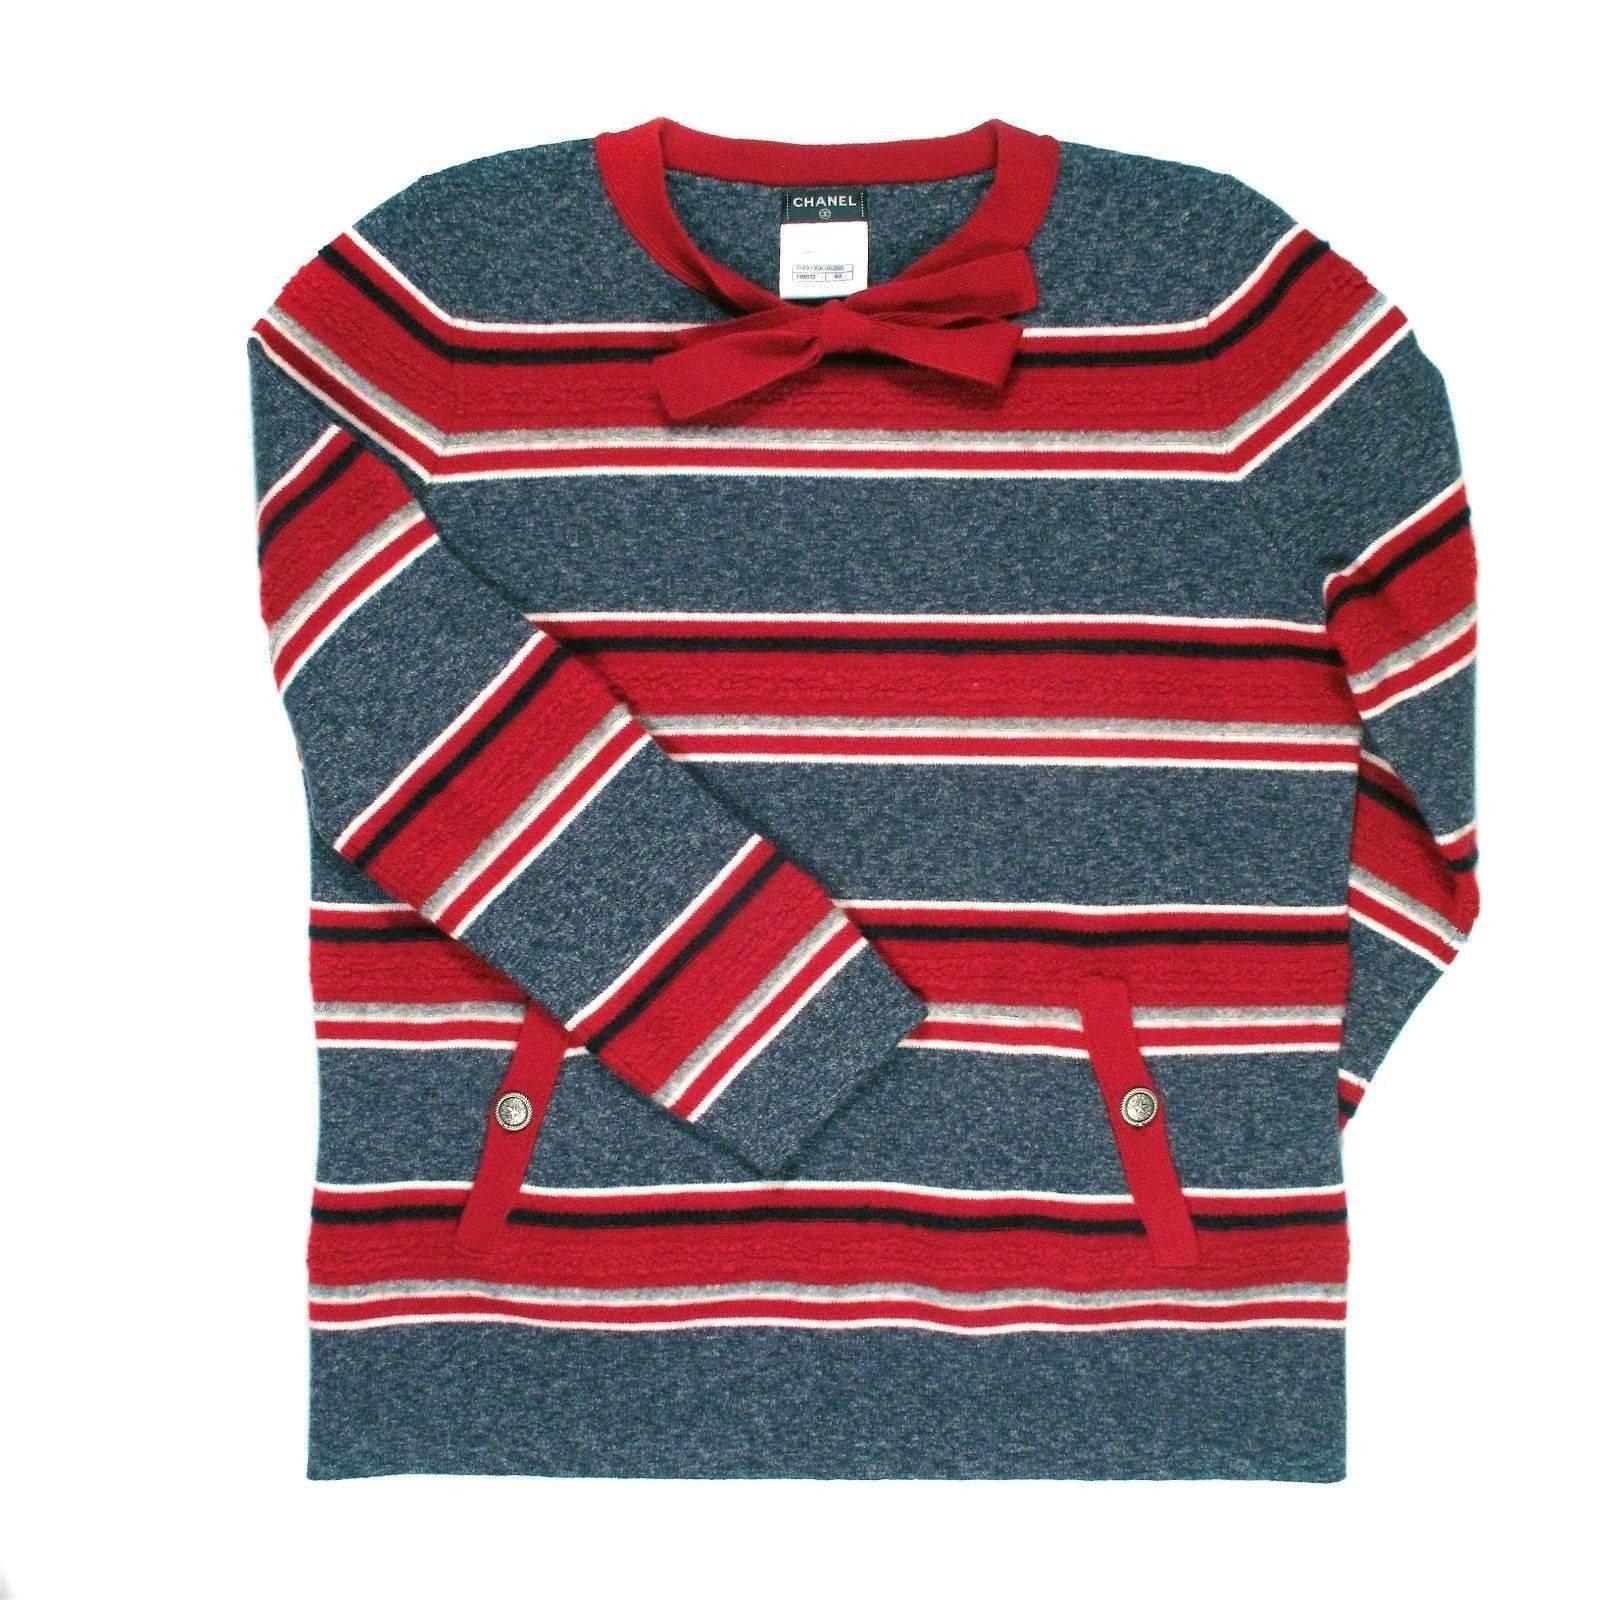 Chanel - Striped Cashmere Sweater